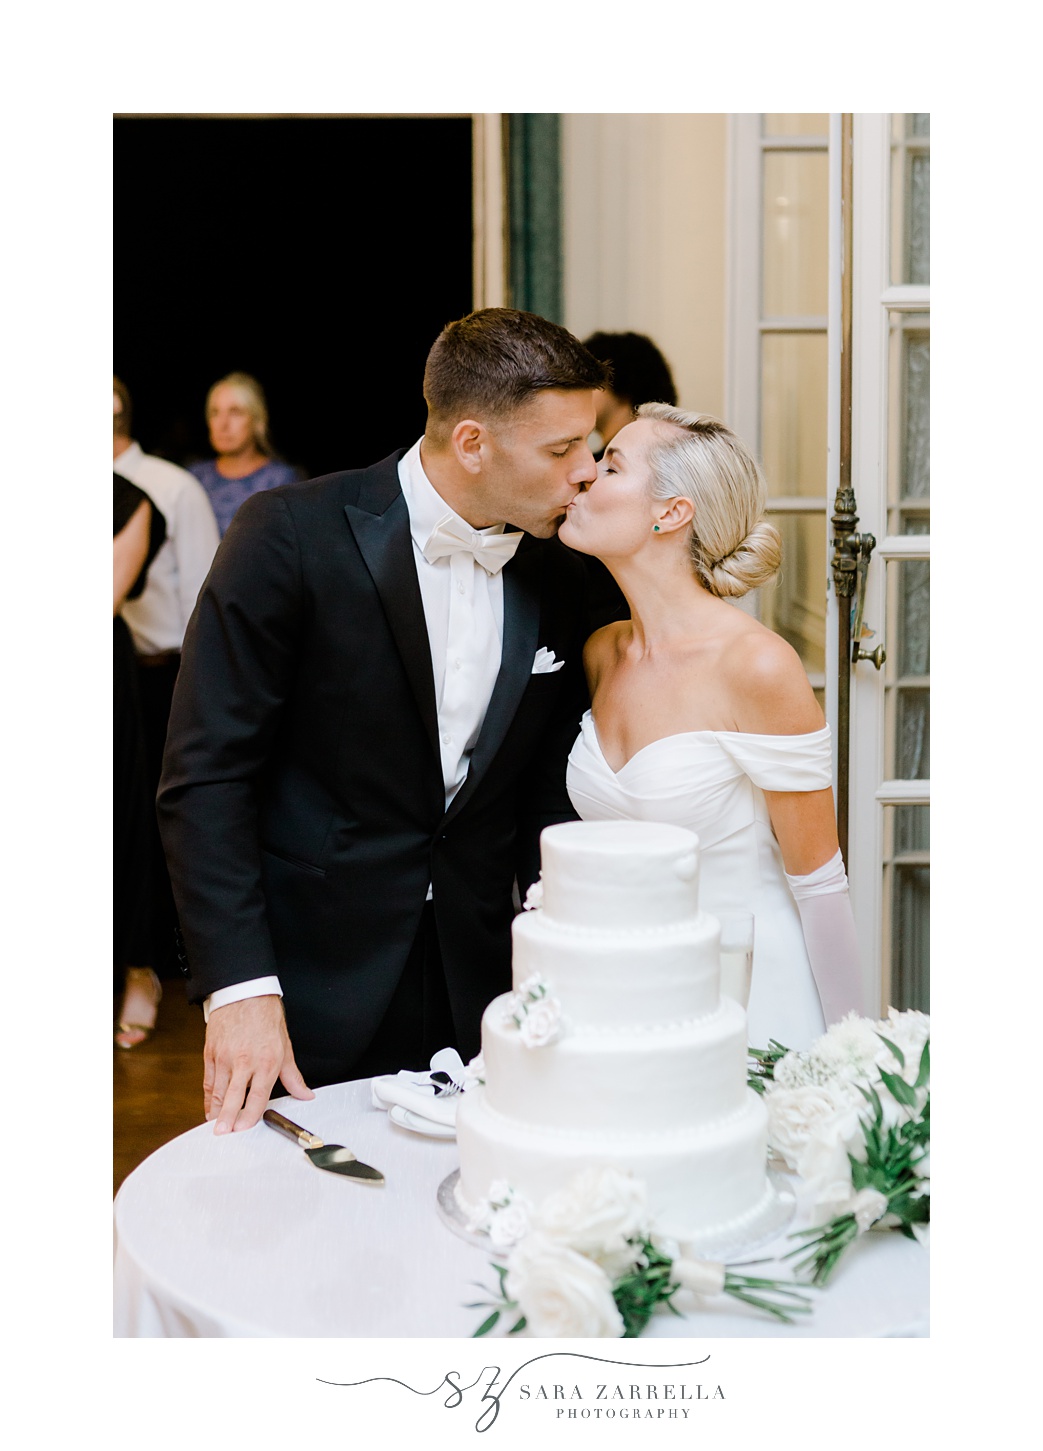 newlyweds kiss by wedding cake during Portsmouth RI wedding reception